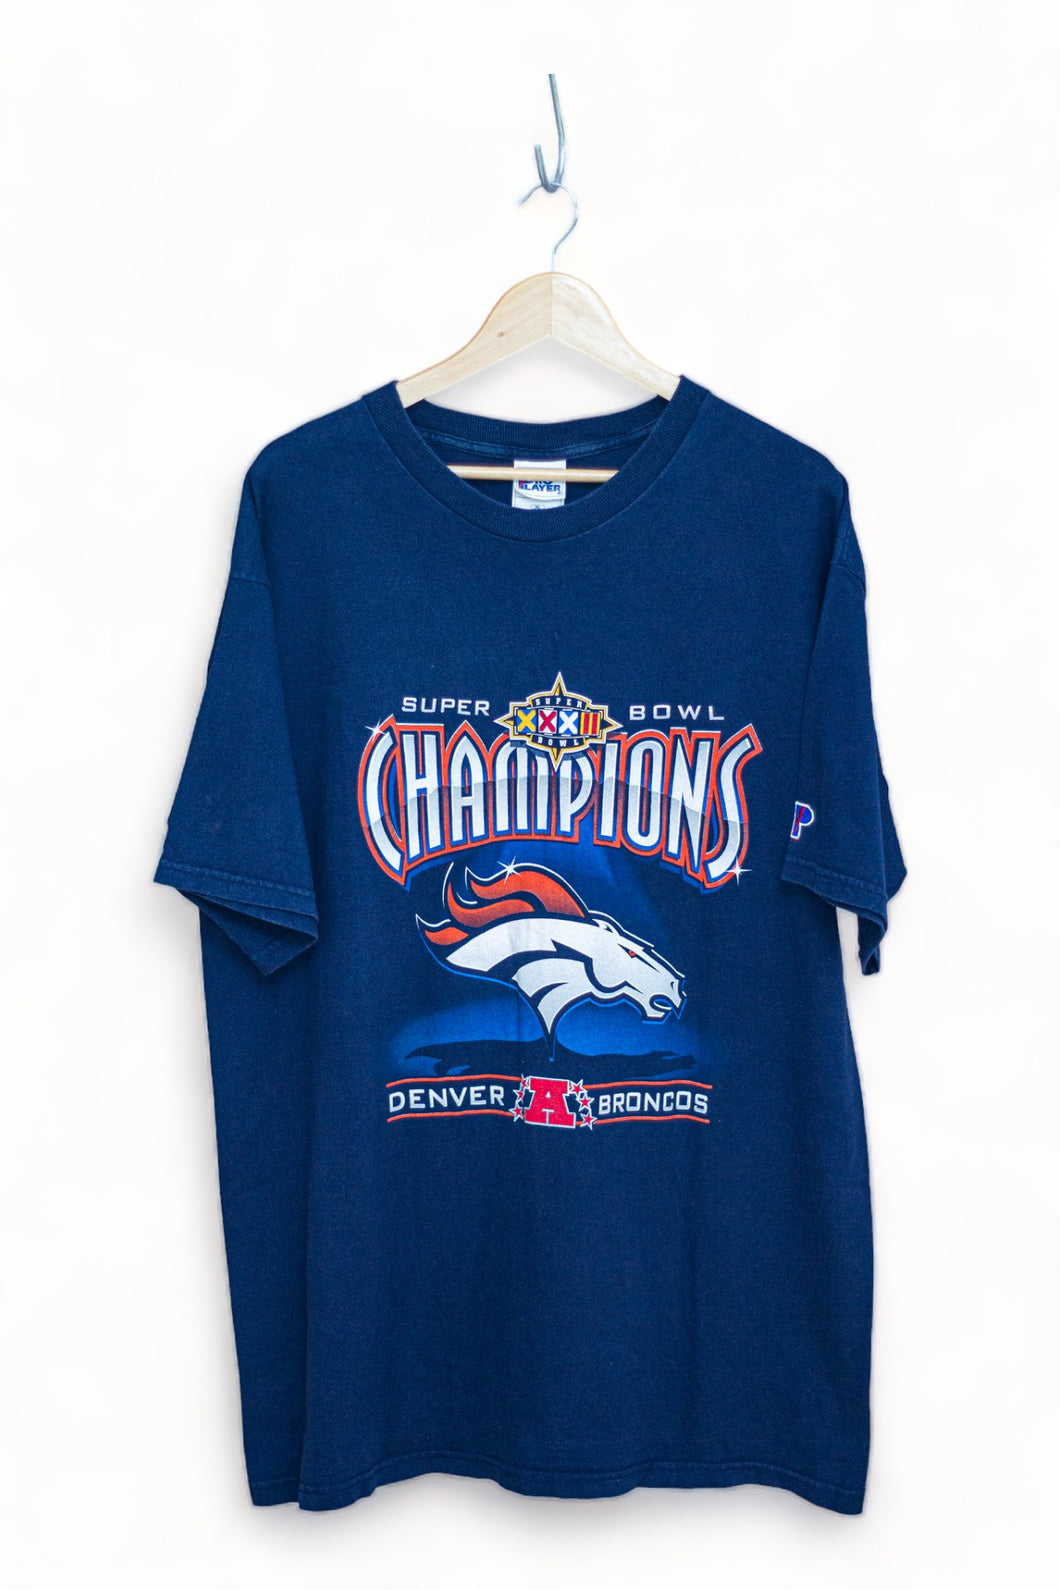 Denver Broncos - Super Bowl XXXII (1998) Champions T-Shirt (XL)